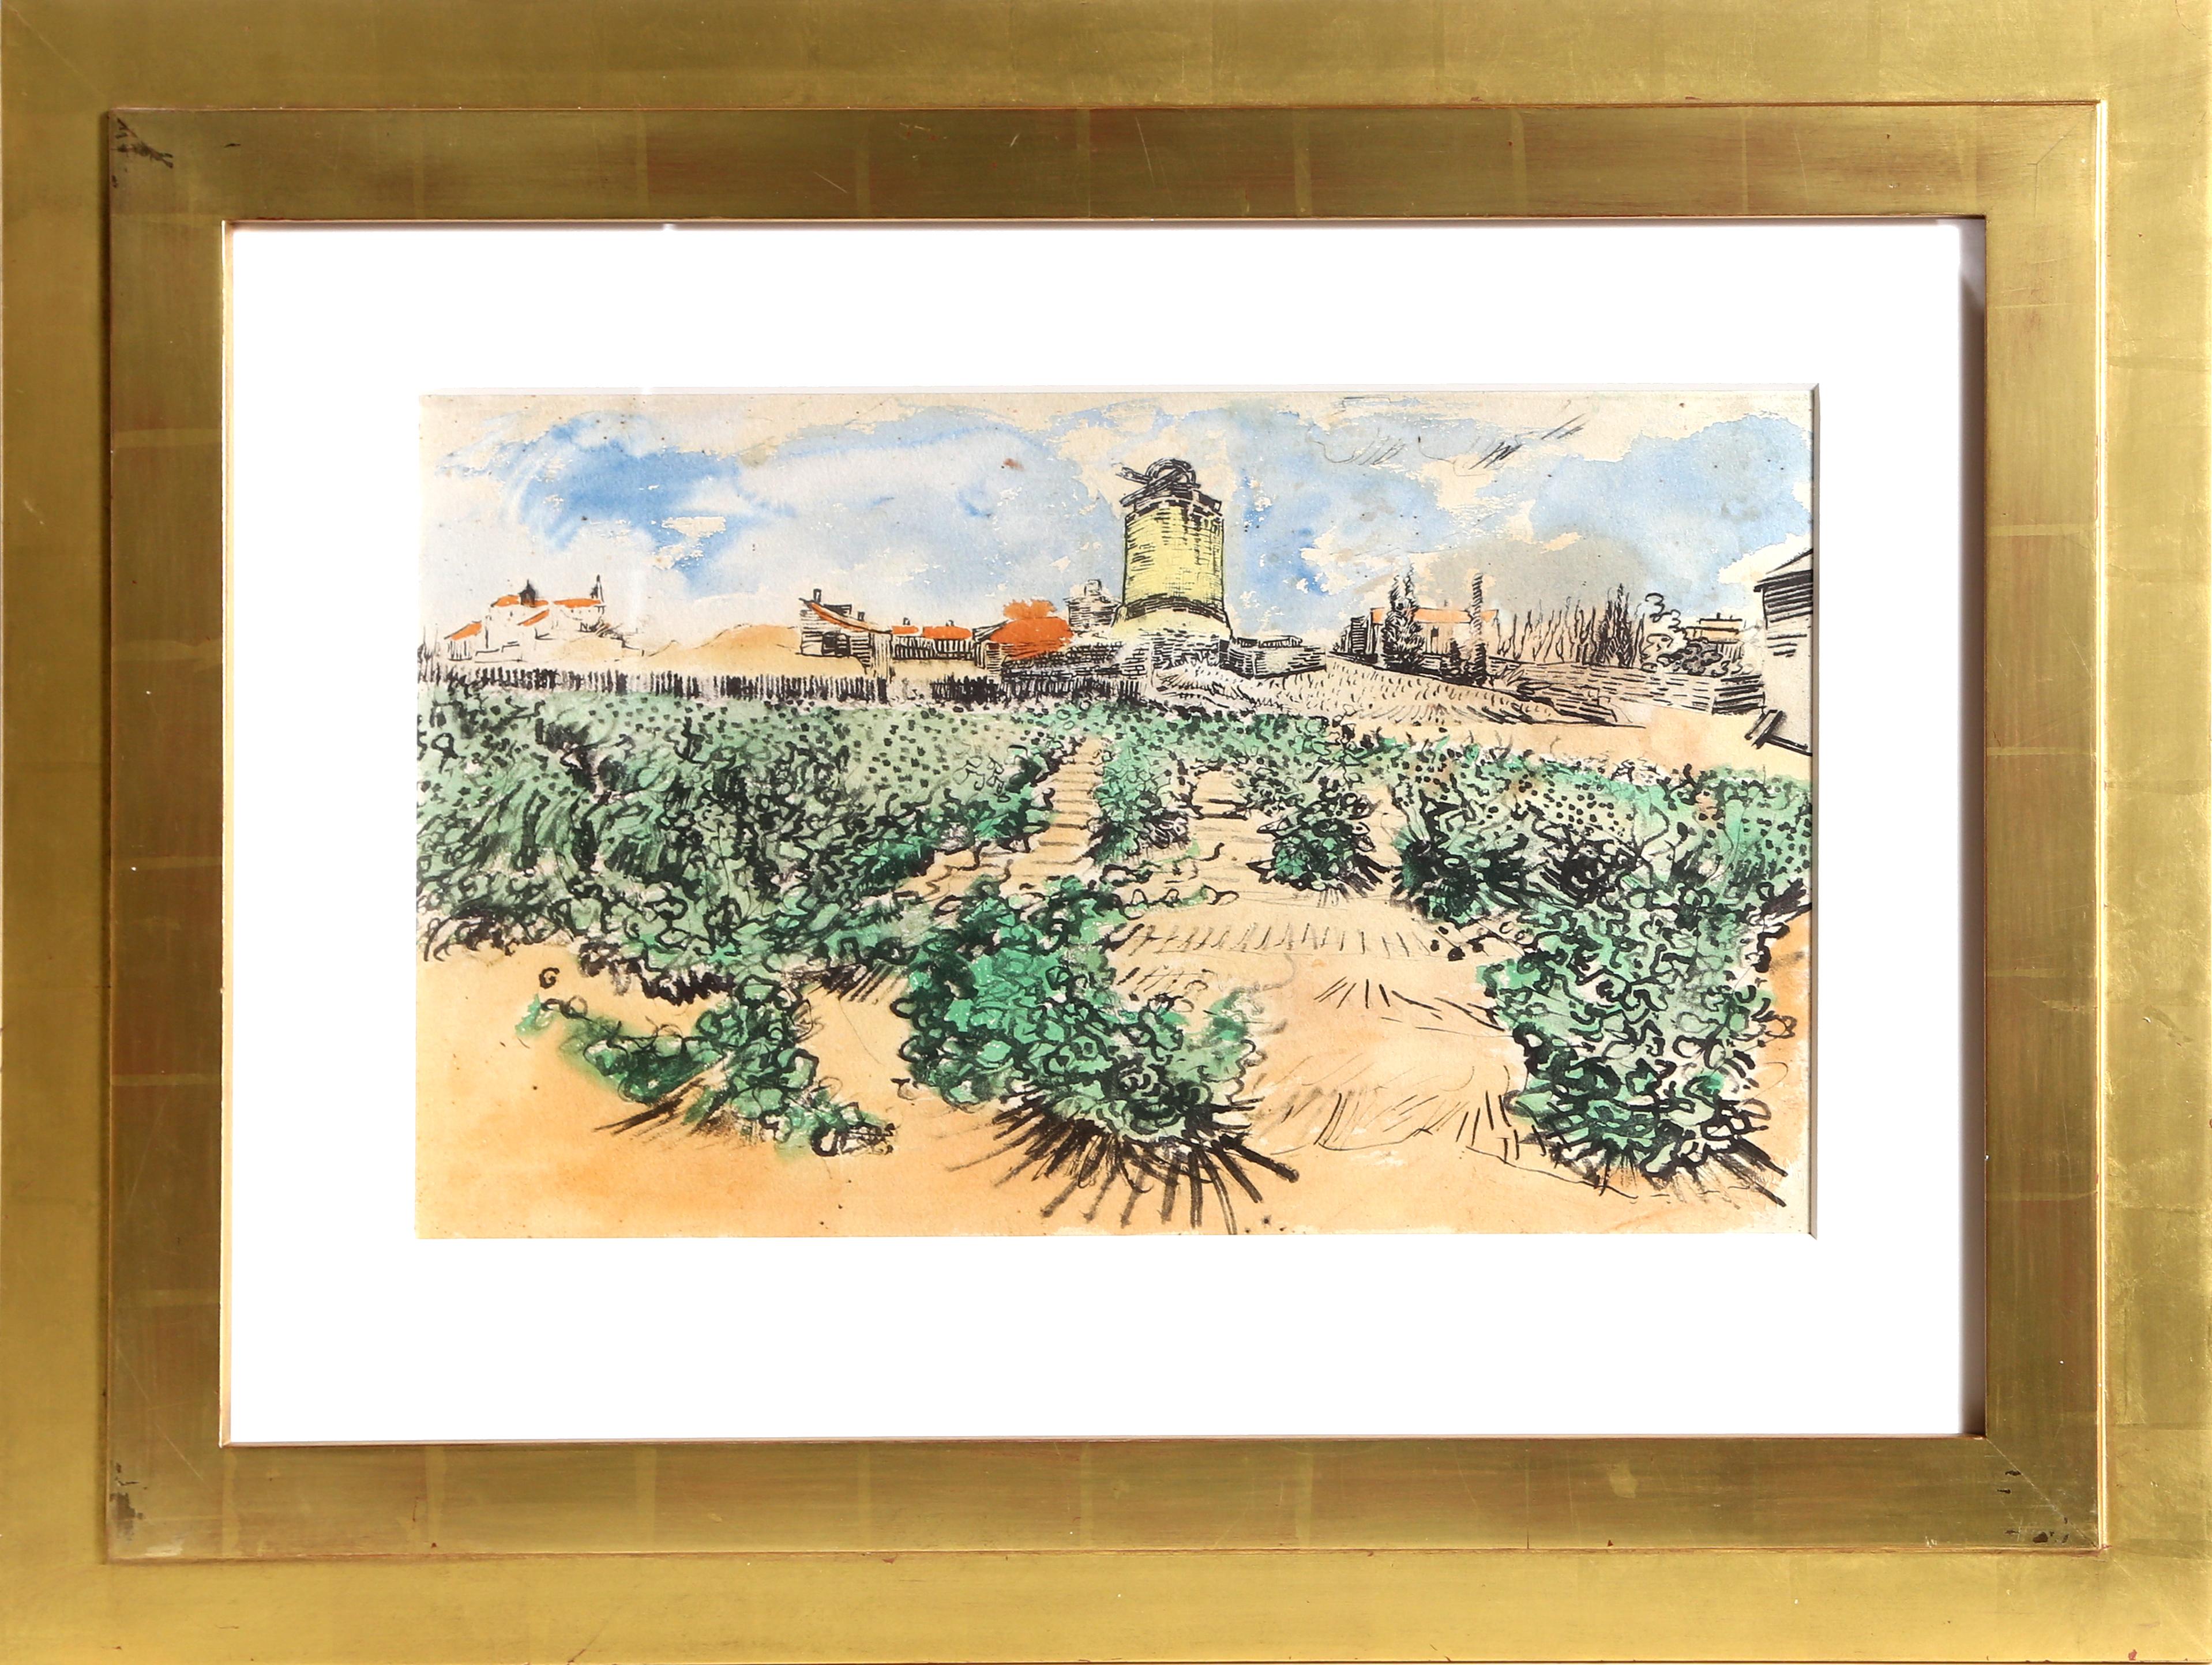 (After) Vincent van Gogh Landscape Print - The Mill of Alphonse Daudet at Fontevieille, Lithograph after Vincent van Gogh